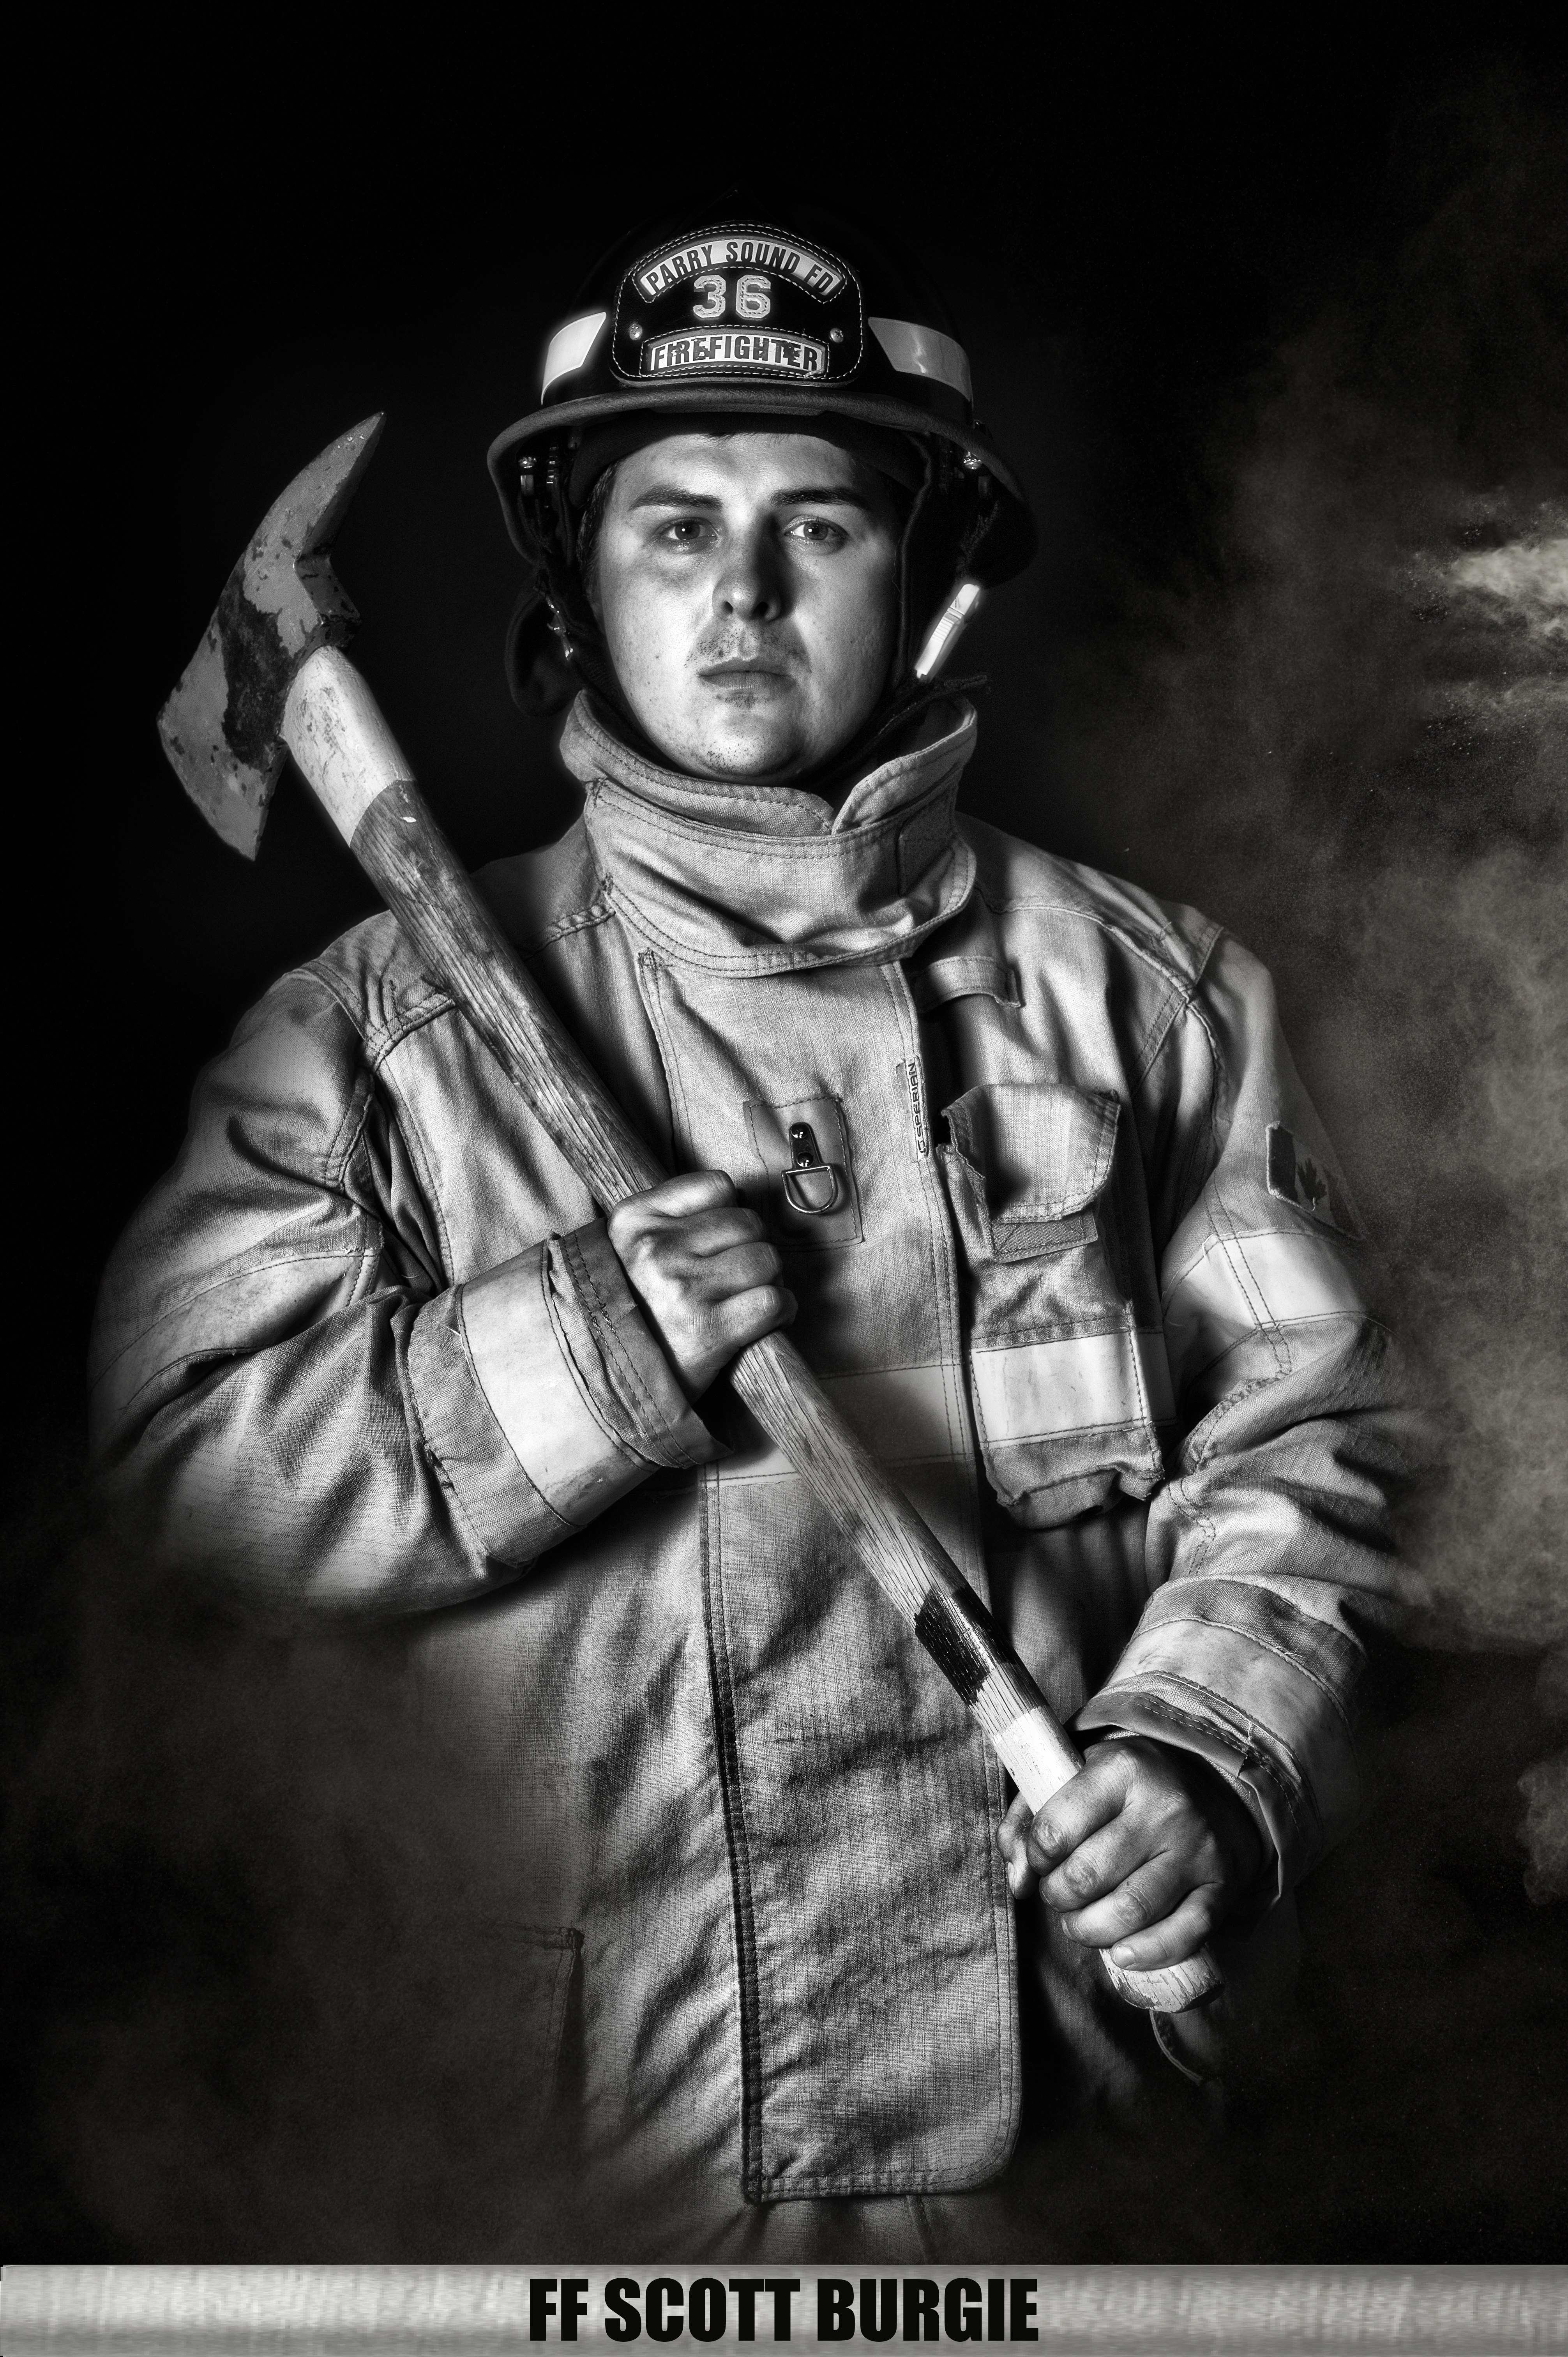 Firefighter Scott Burgie